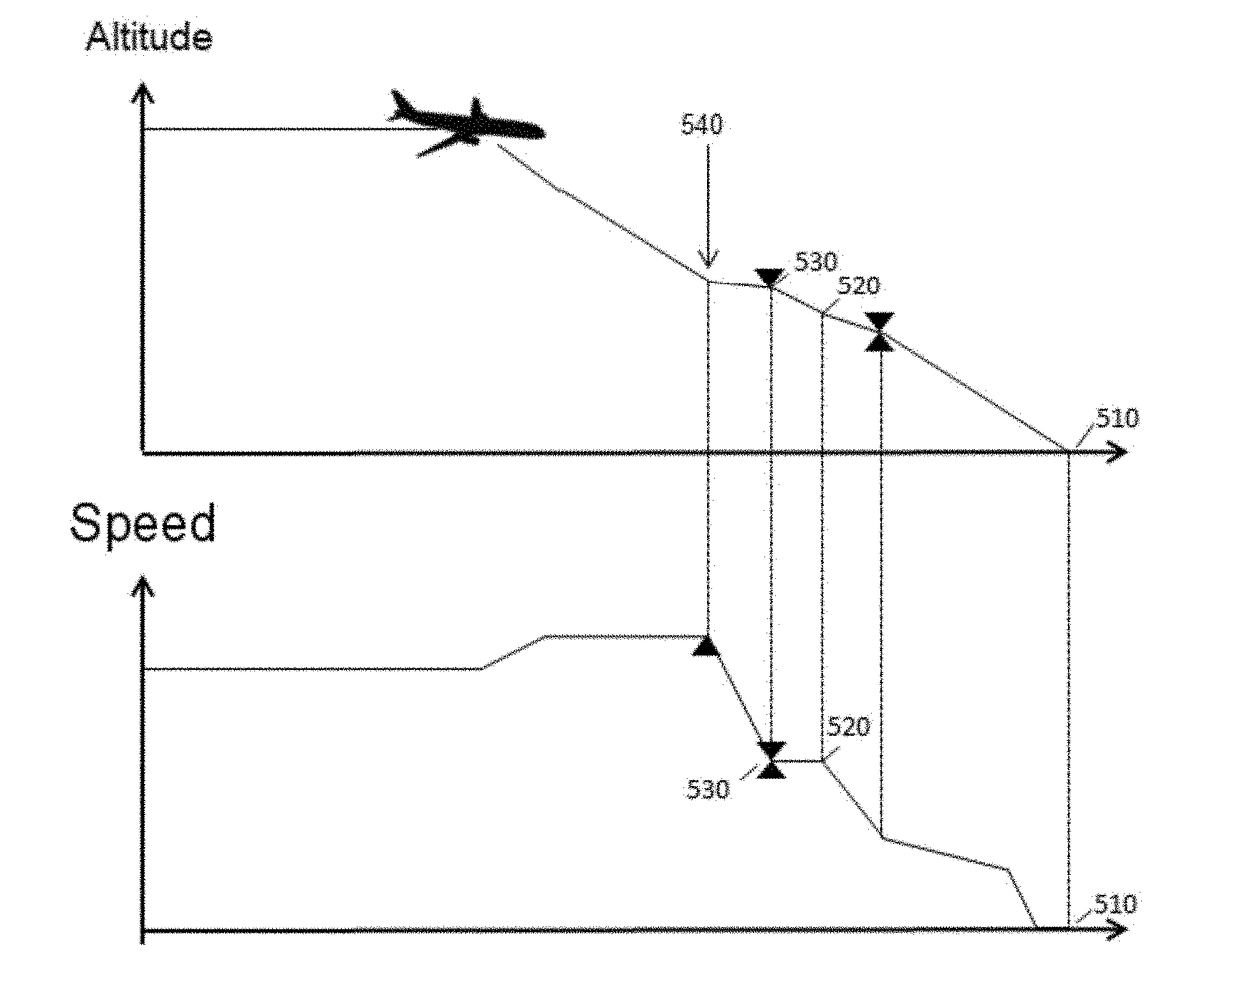 Aircraft descent phase management